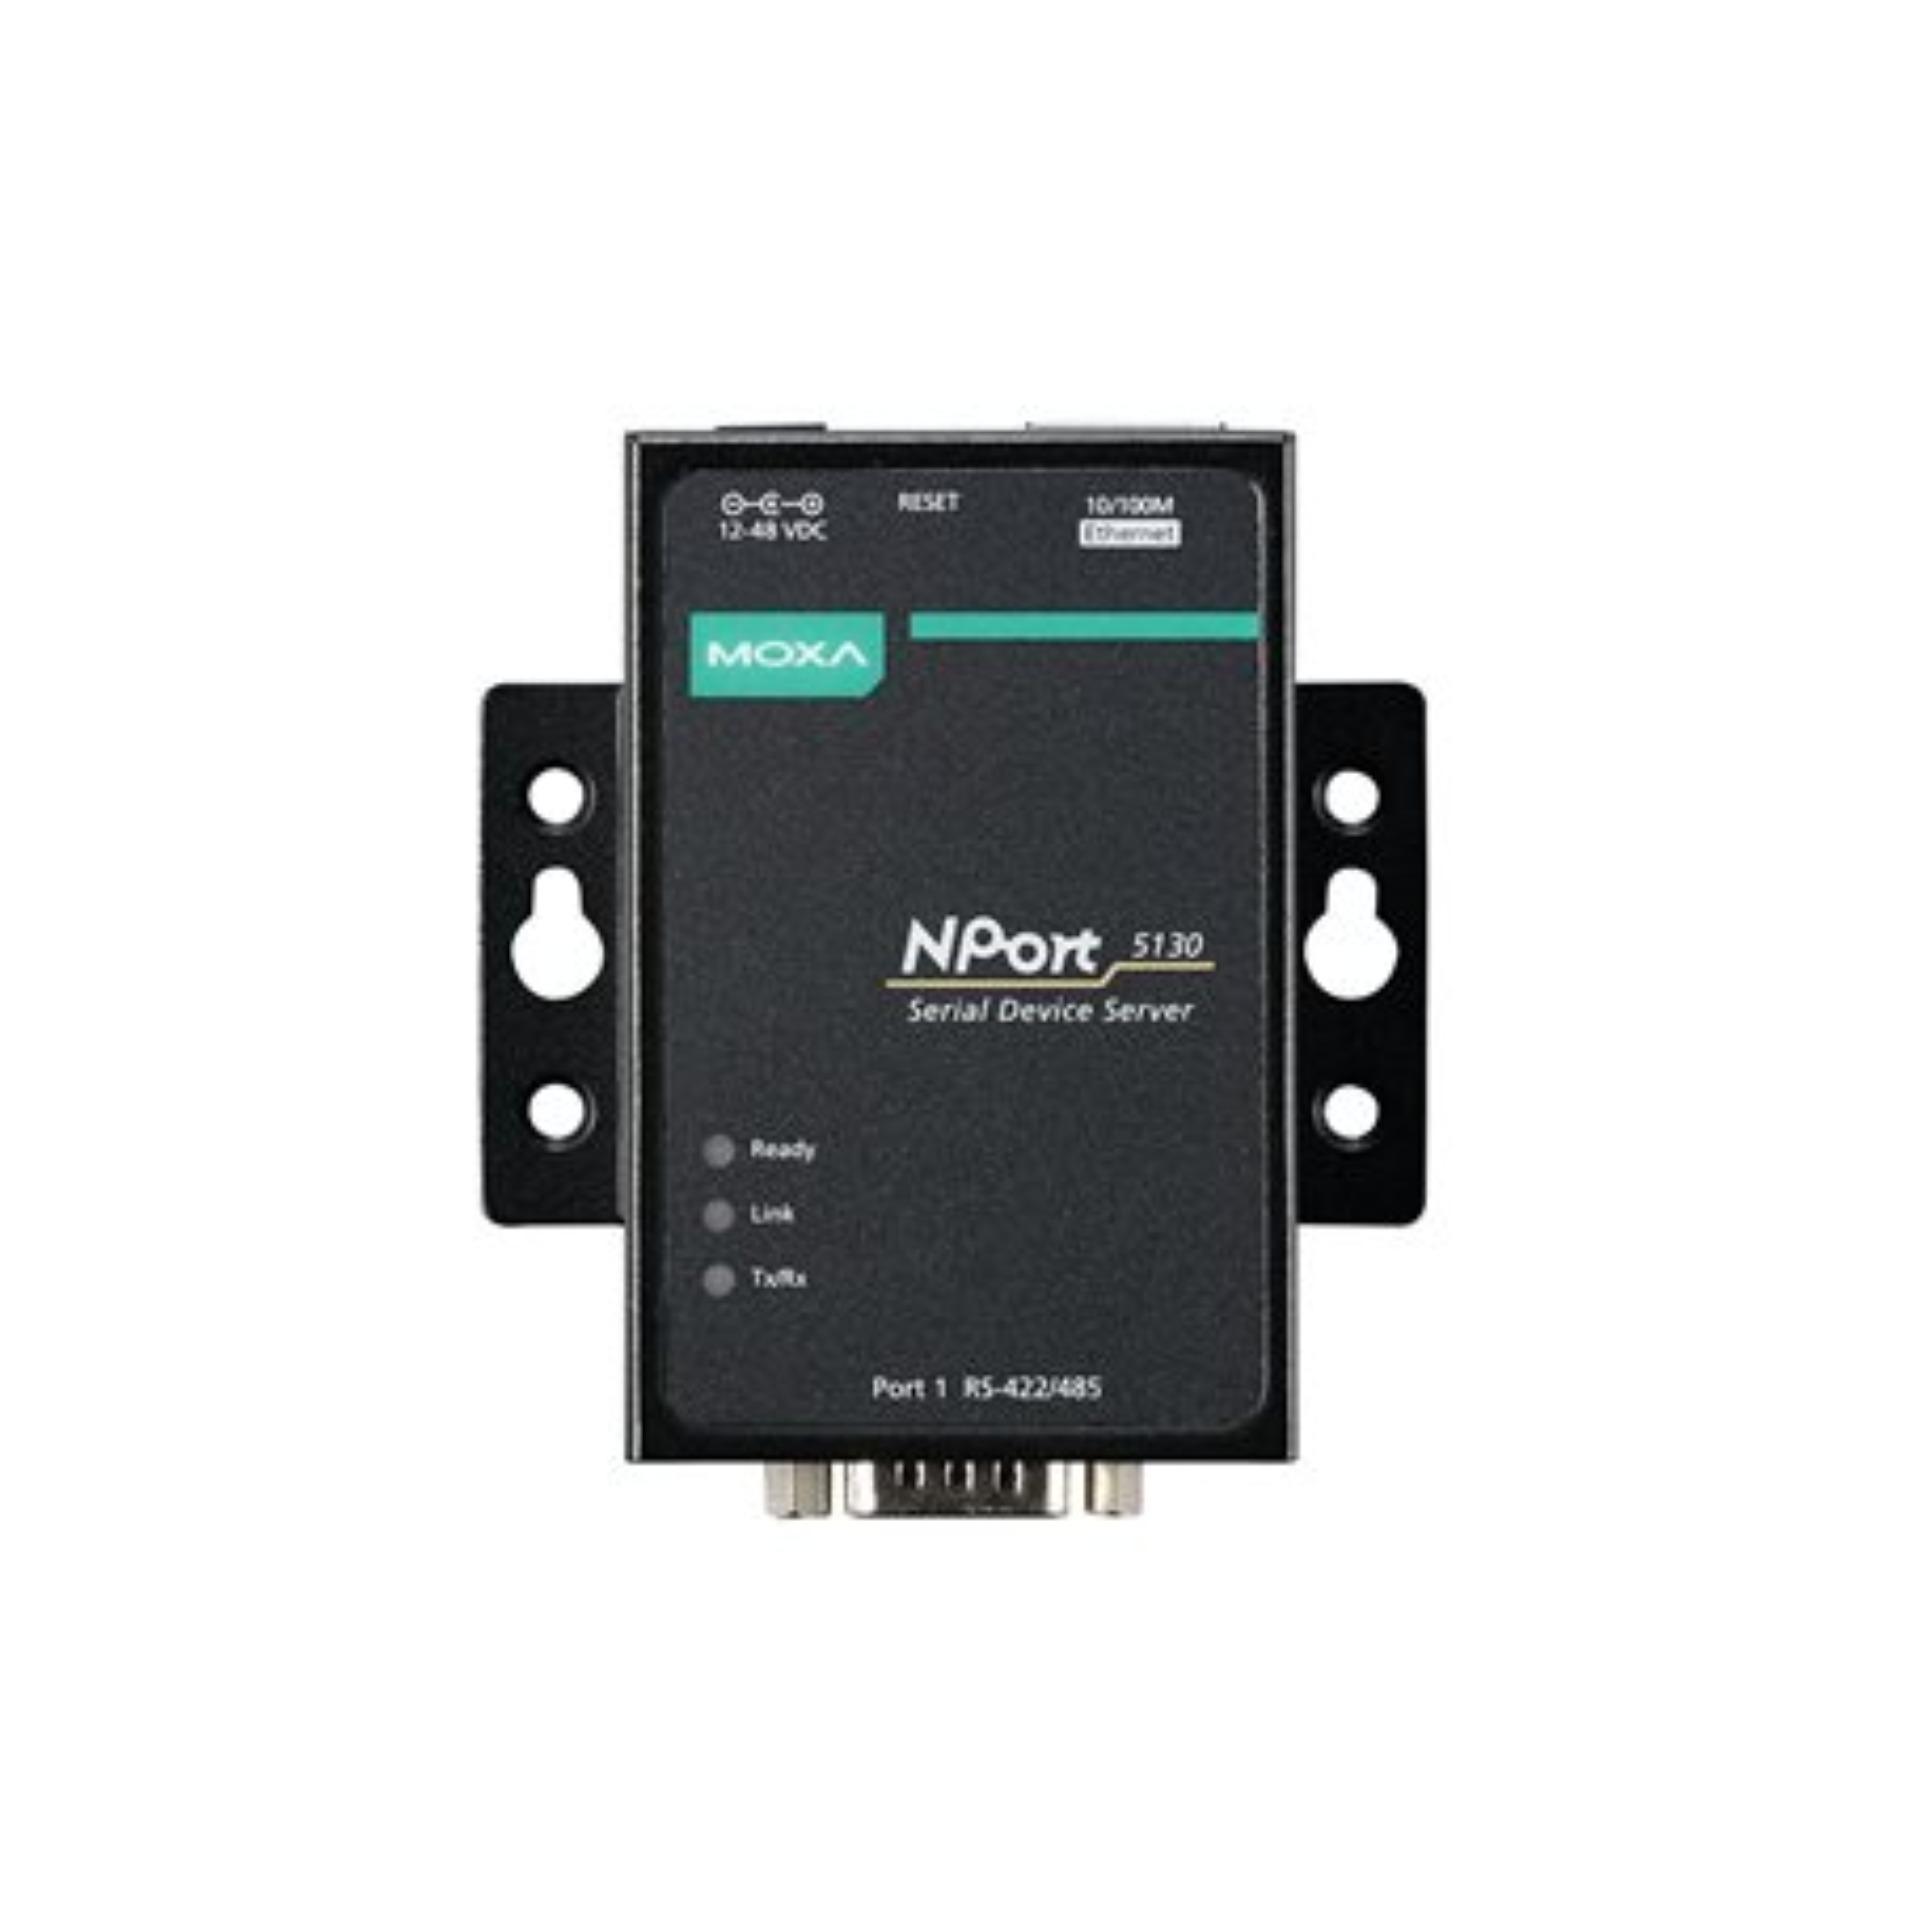 Nport 5130 - MOXA - Serial to Lan, Serial Converter, Serial to Ethernet - จำหน่ายโดย Factomart.com - 1 Port RS422/485 to Lan รับประกัน 5 ปี